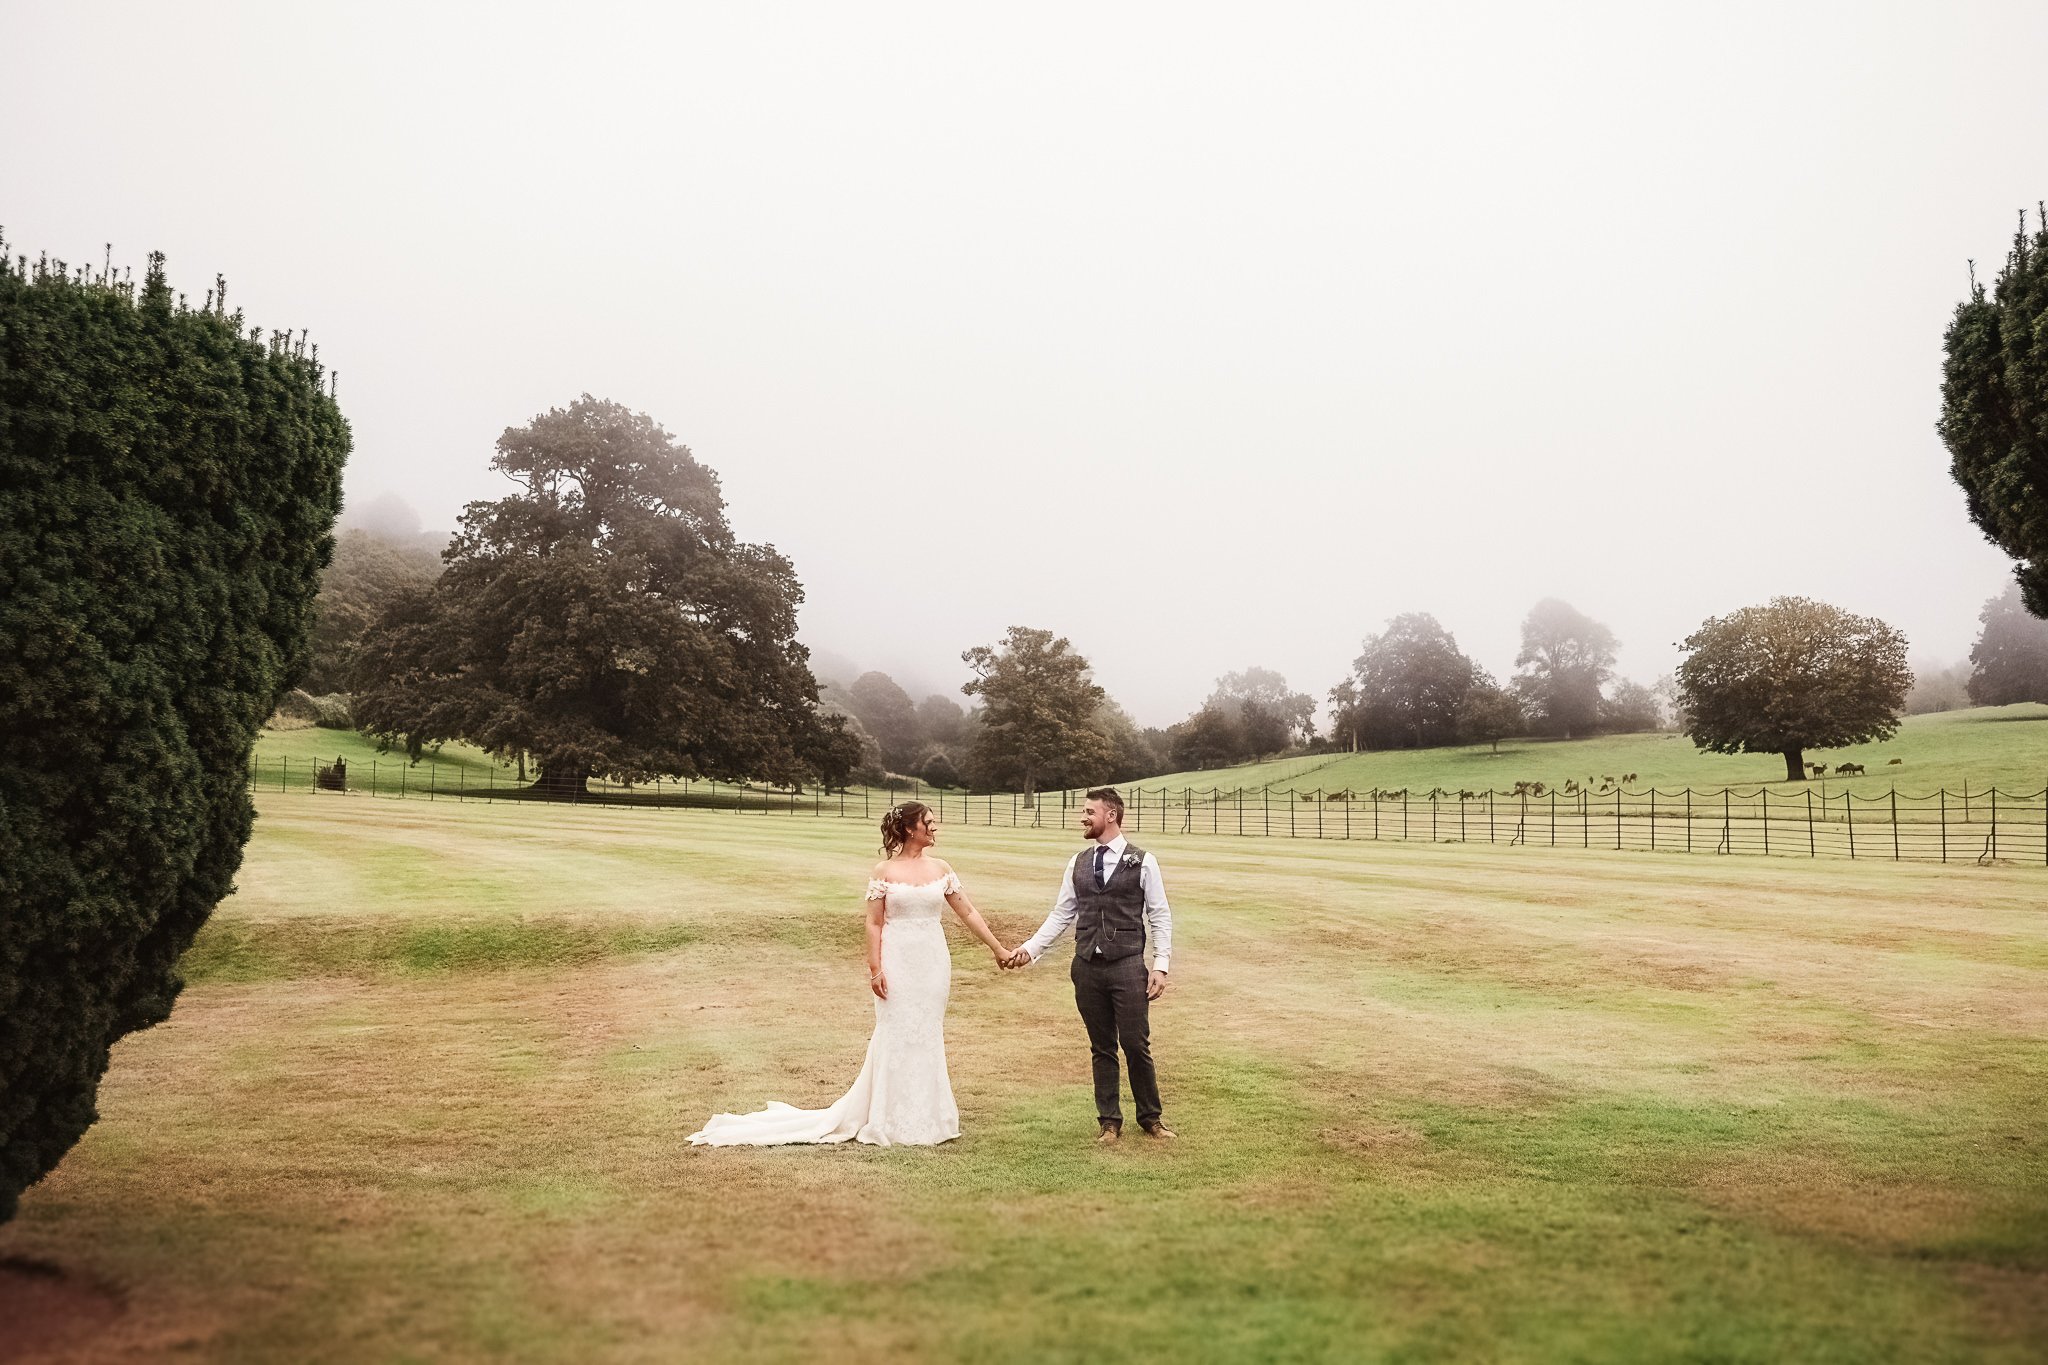 Katrina & Dan's wedding at St. Audries Park in Somerset-177.jpg